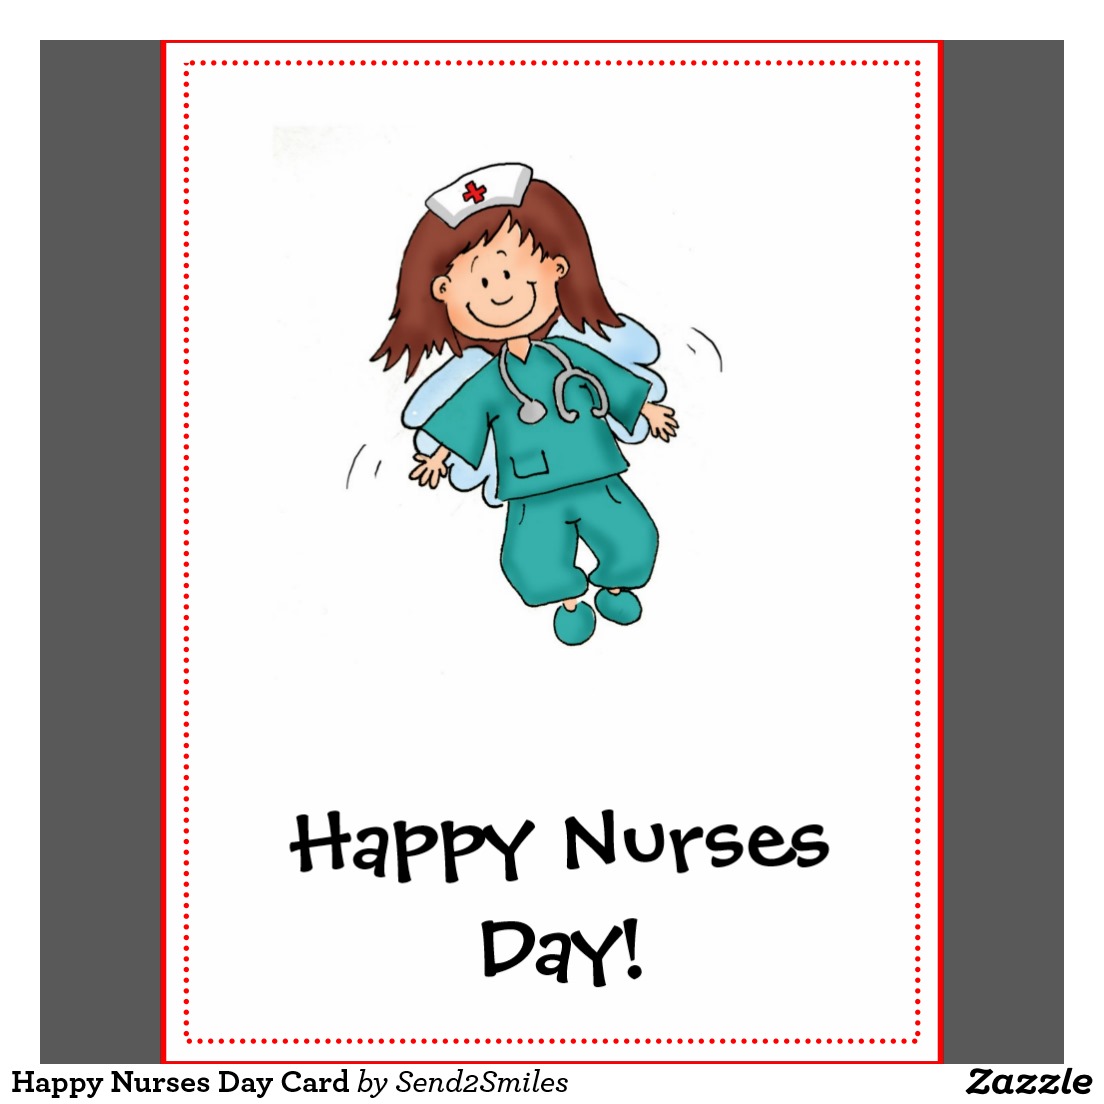 Happy Nurses Day Greeting Card Image